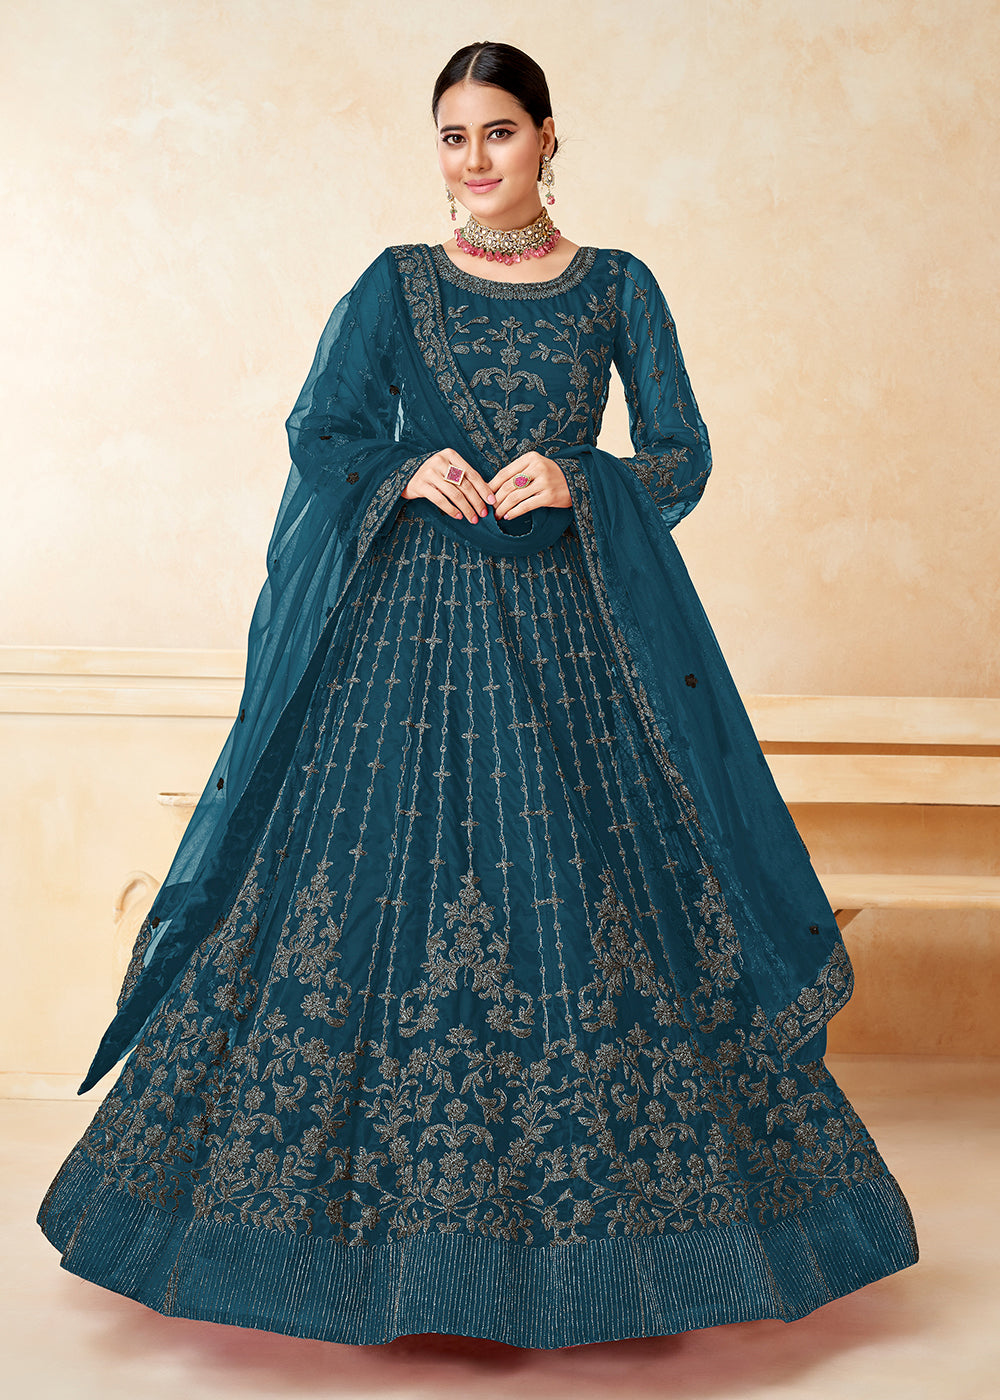 Buy Now Tempting Teal Blue Net Wedding Wear Anarkali Dress Online in USA, UK, Australia, New Zealand, Canada & Worldwide at Empress Clothing.